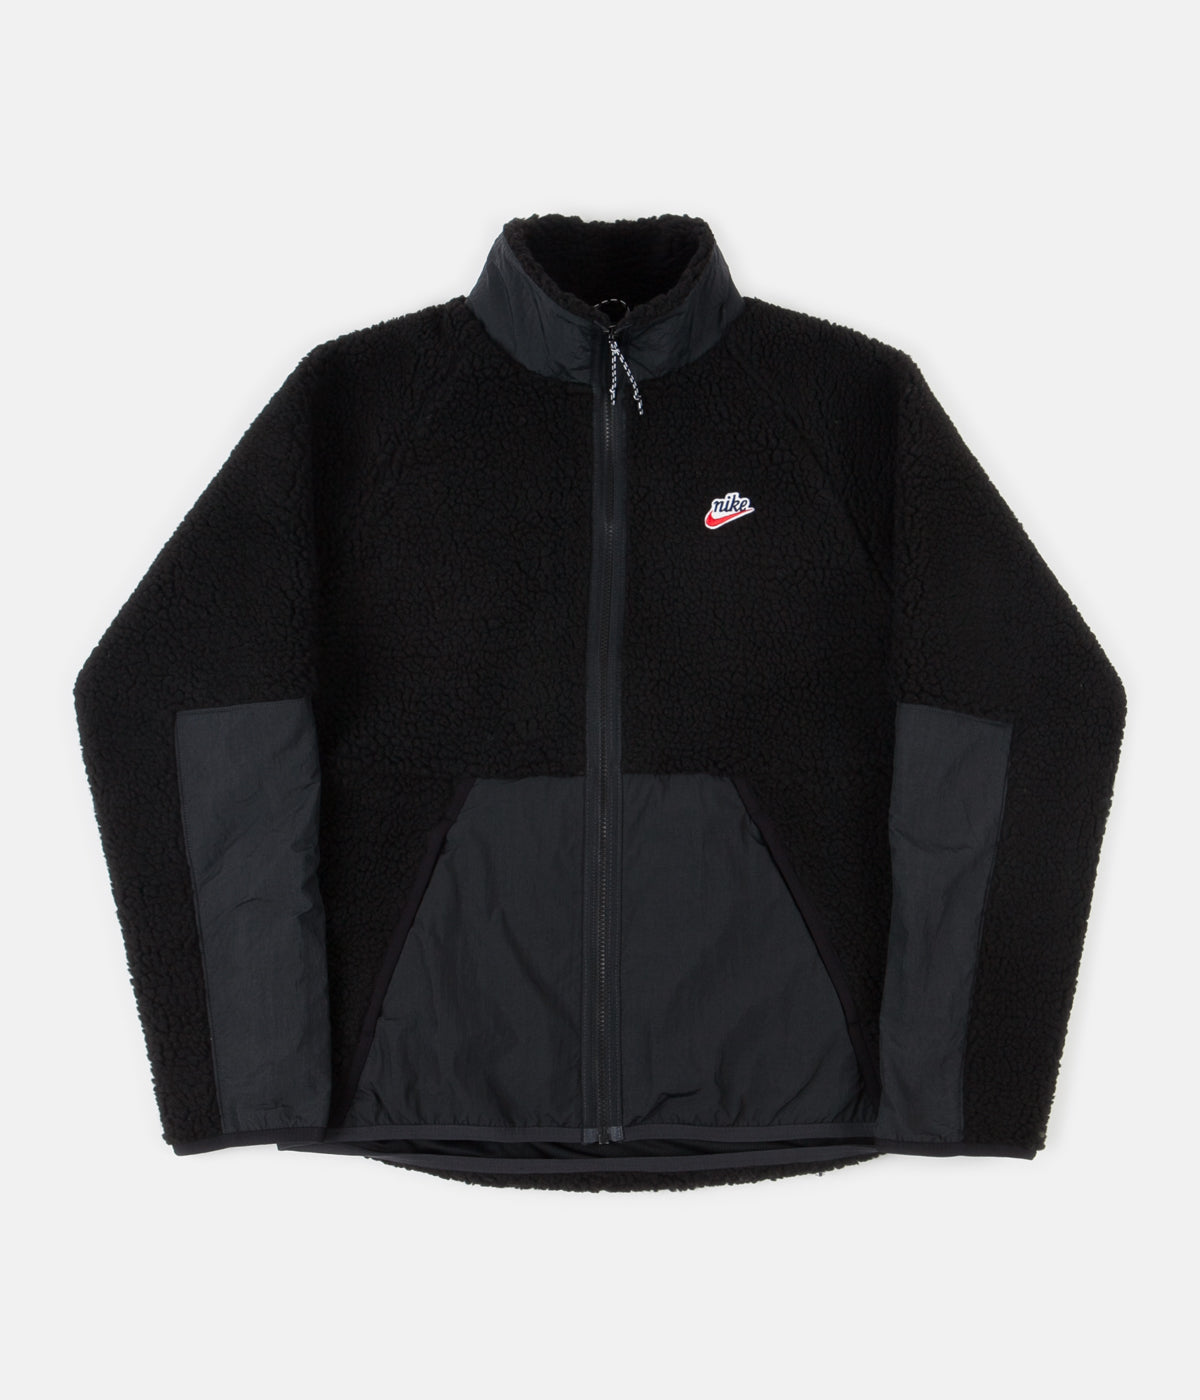 tech fleece jacket black